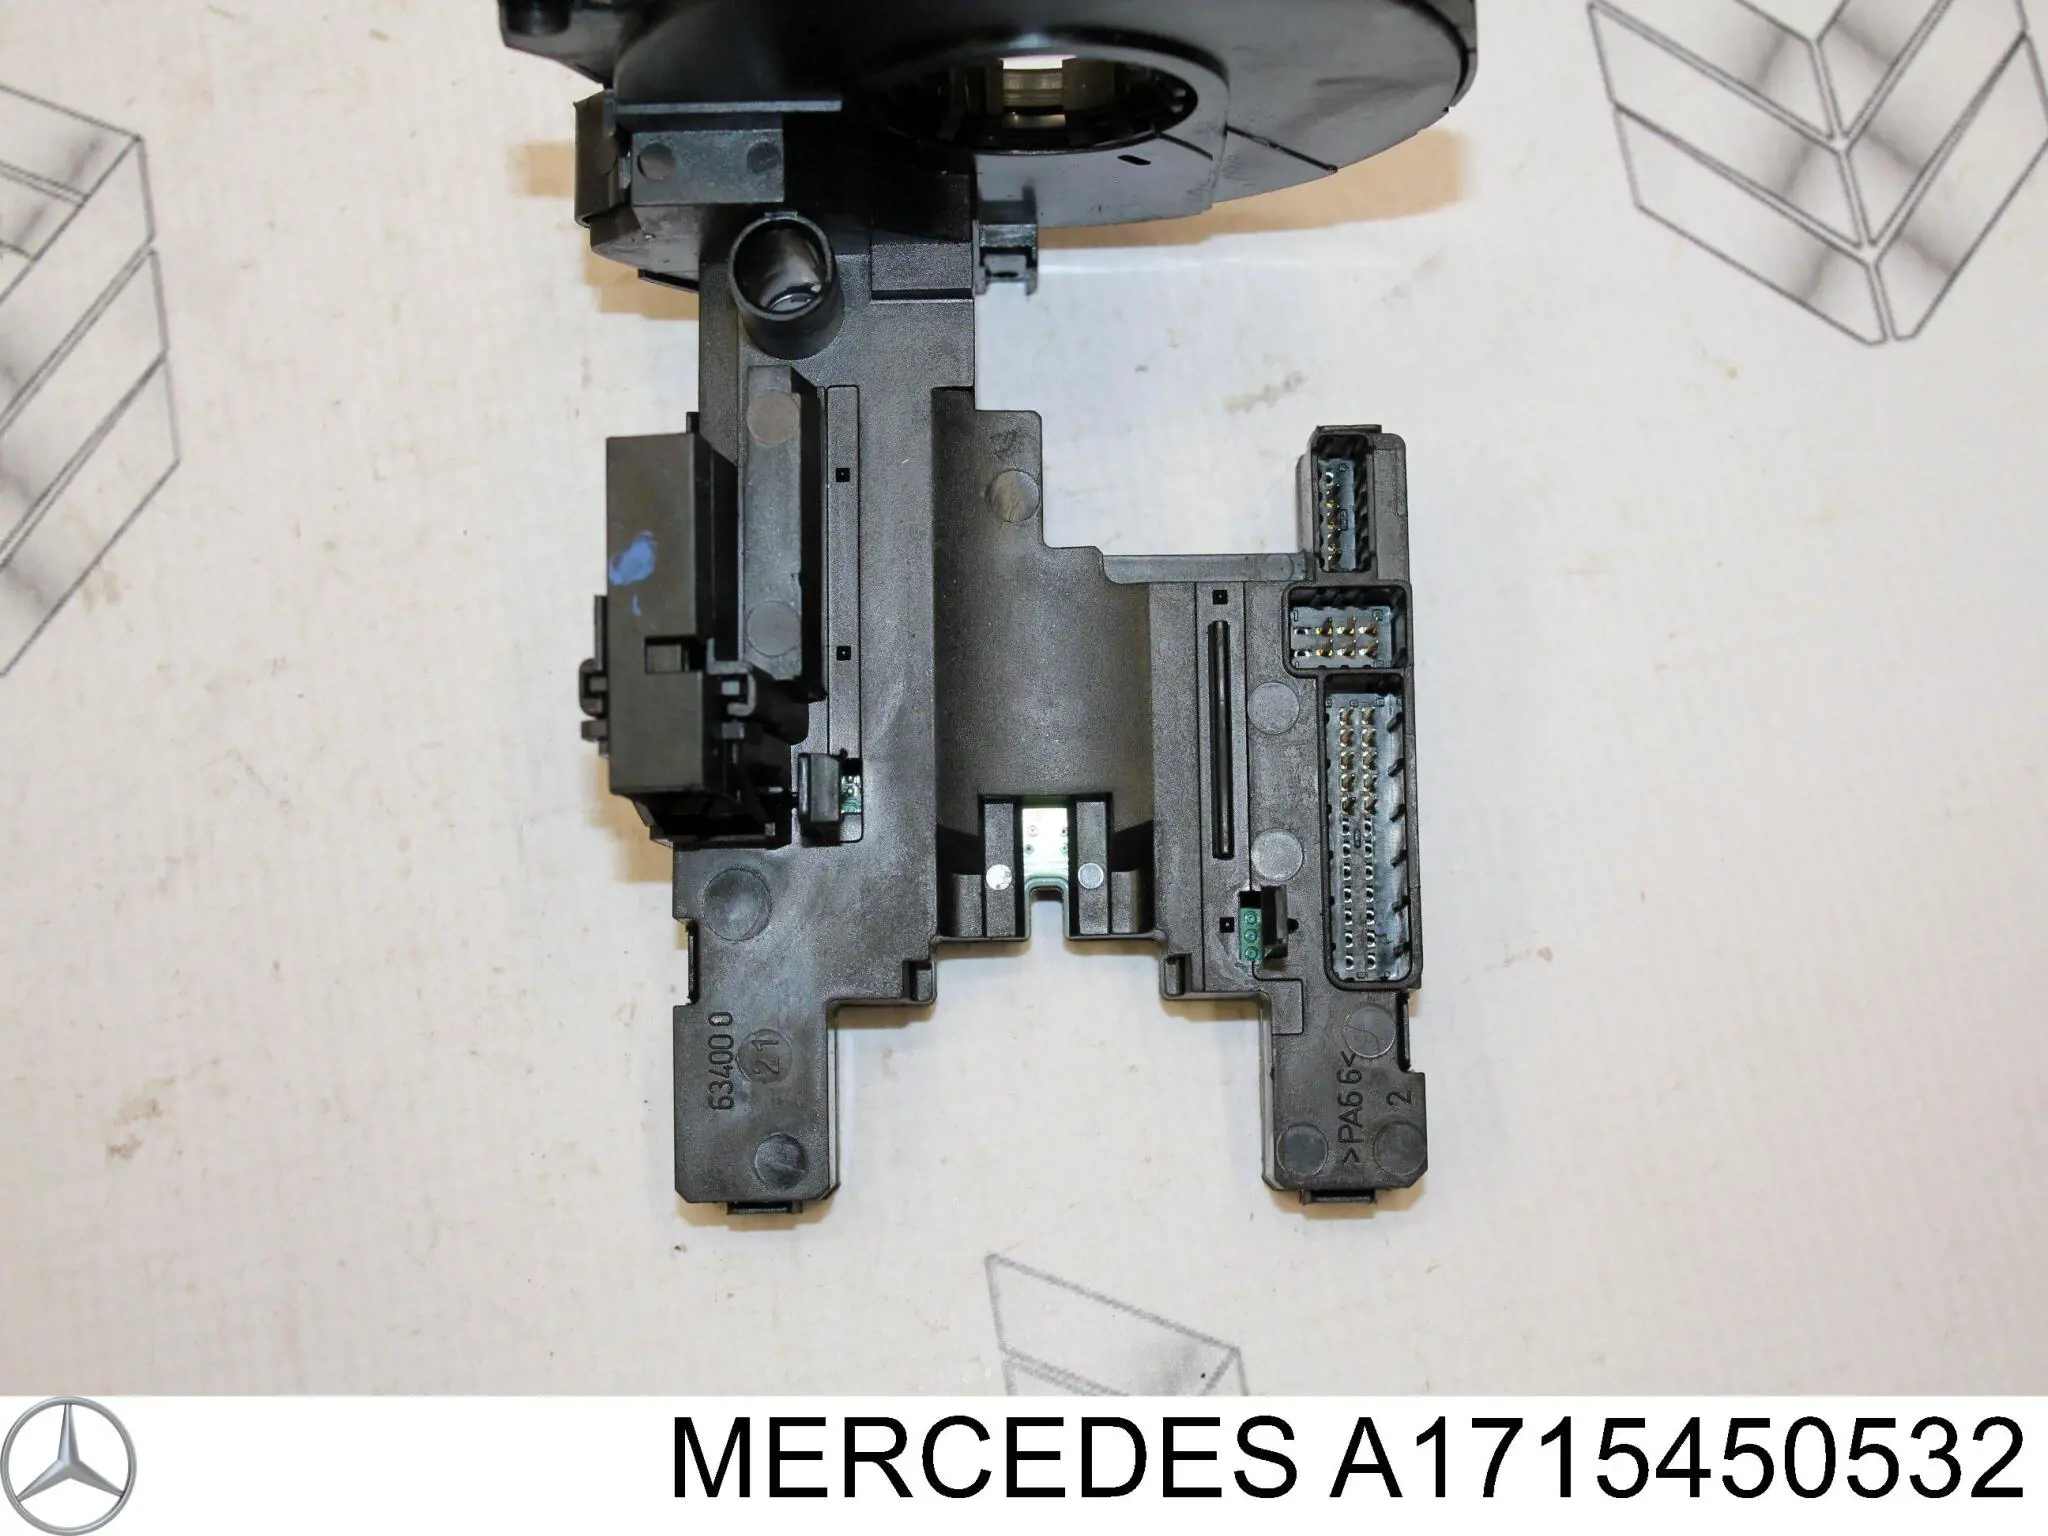 A1715450532 Mercedes датчик угла поворота рулевого колеса